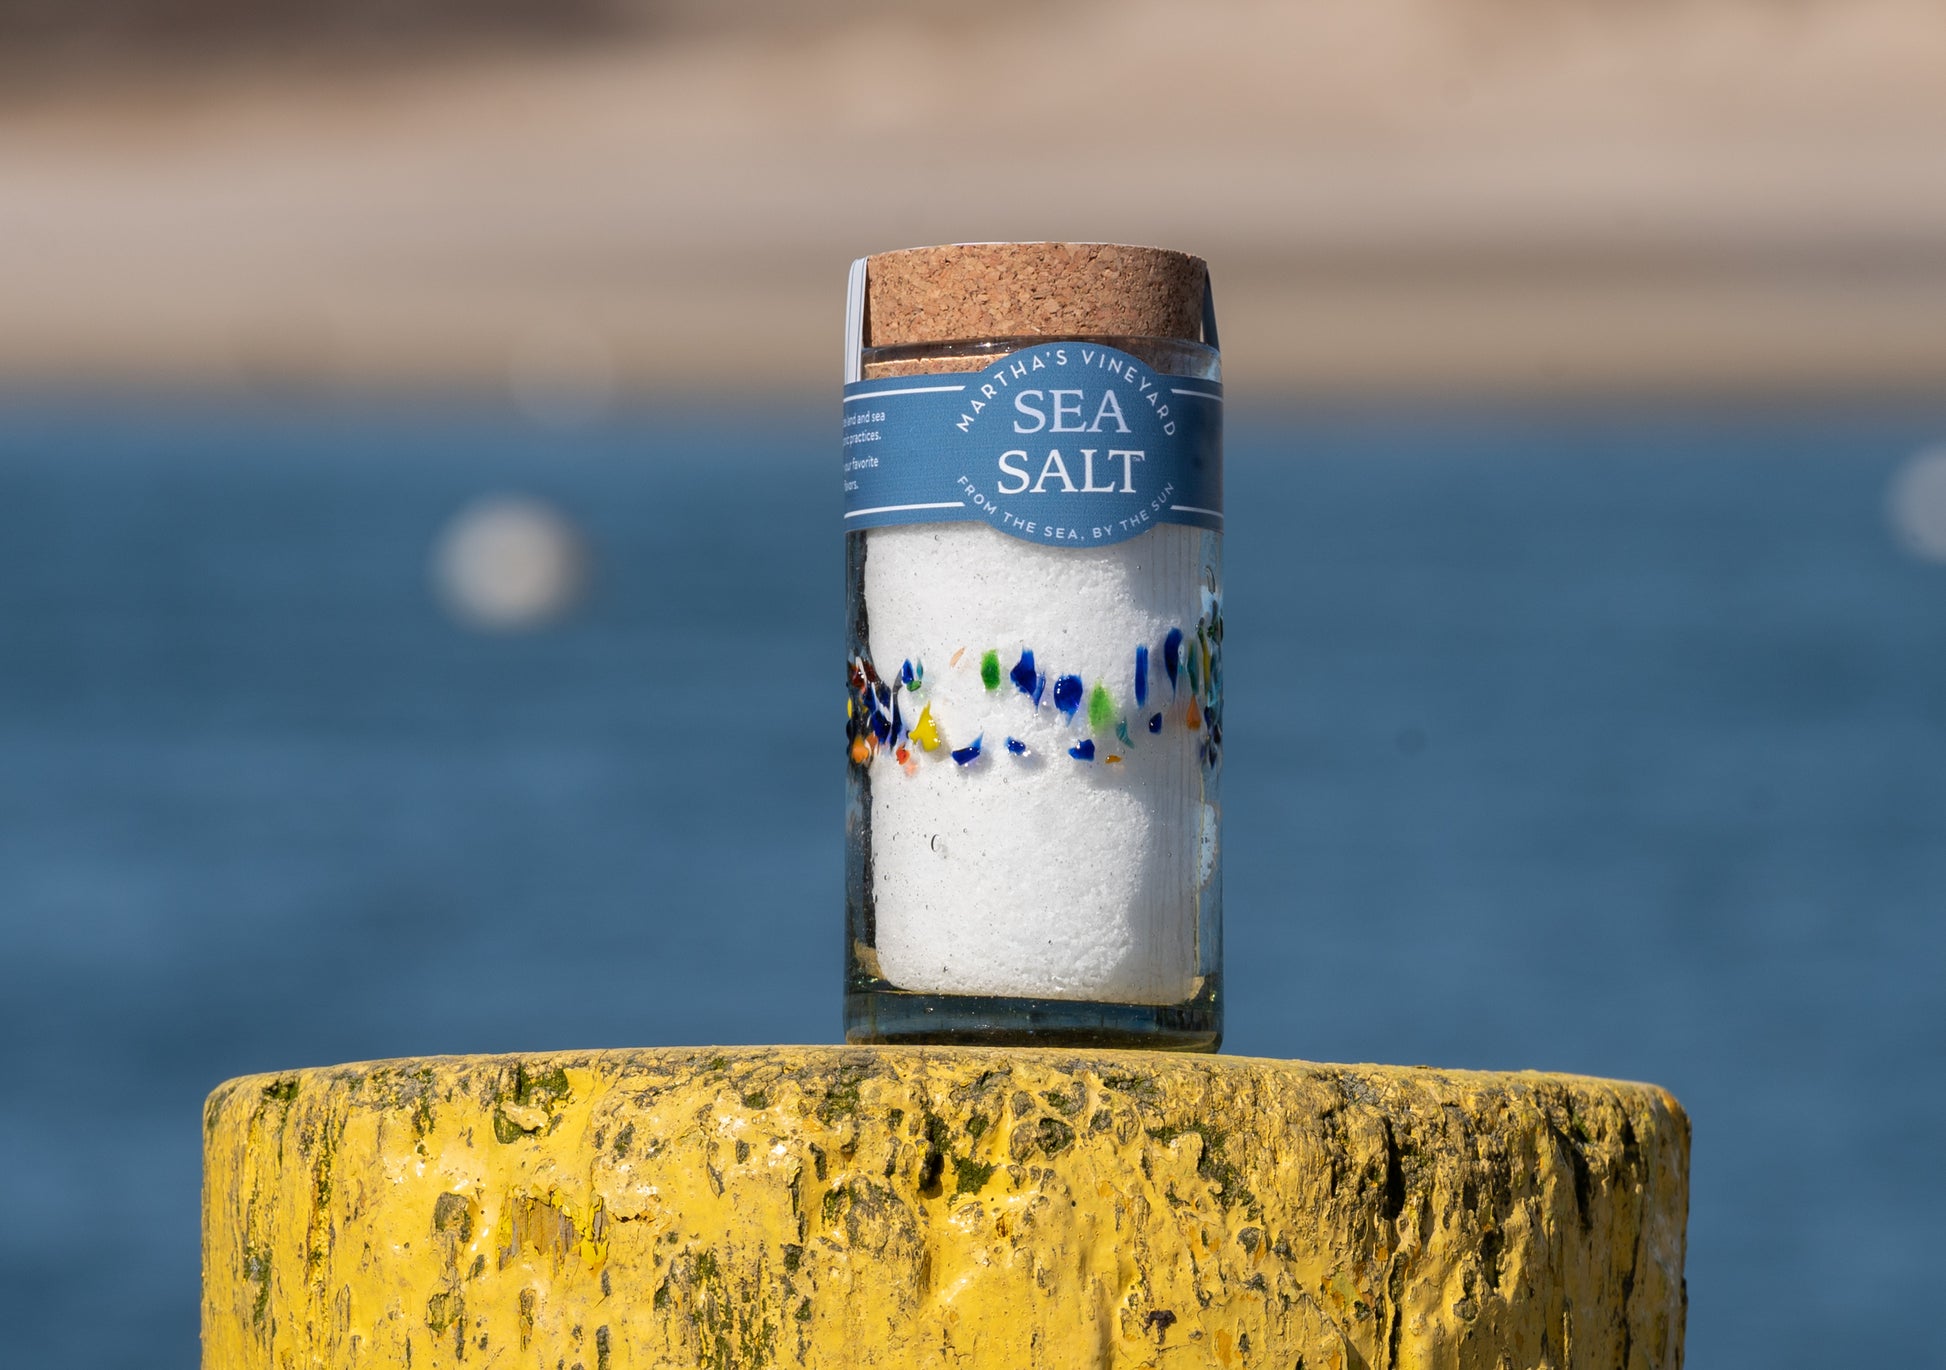 $0.75 seaglass pieces – Sea Things Ventura